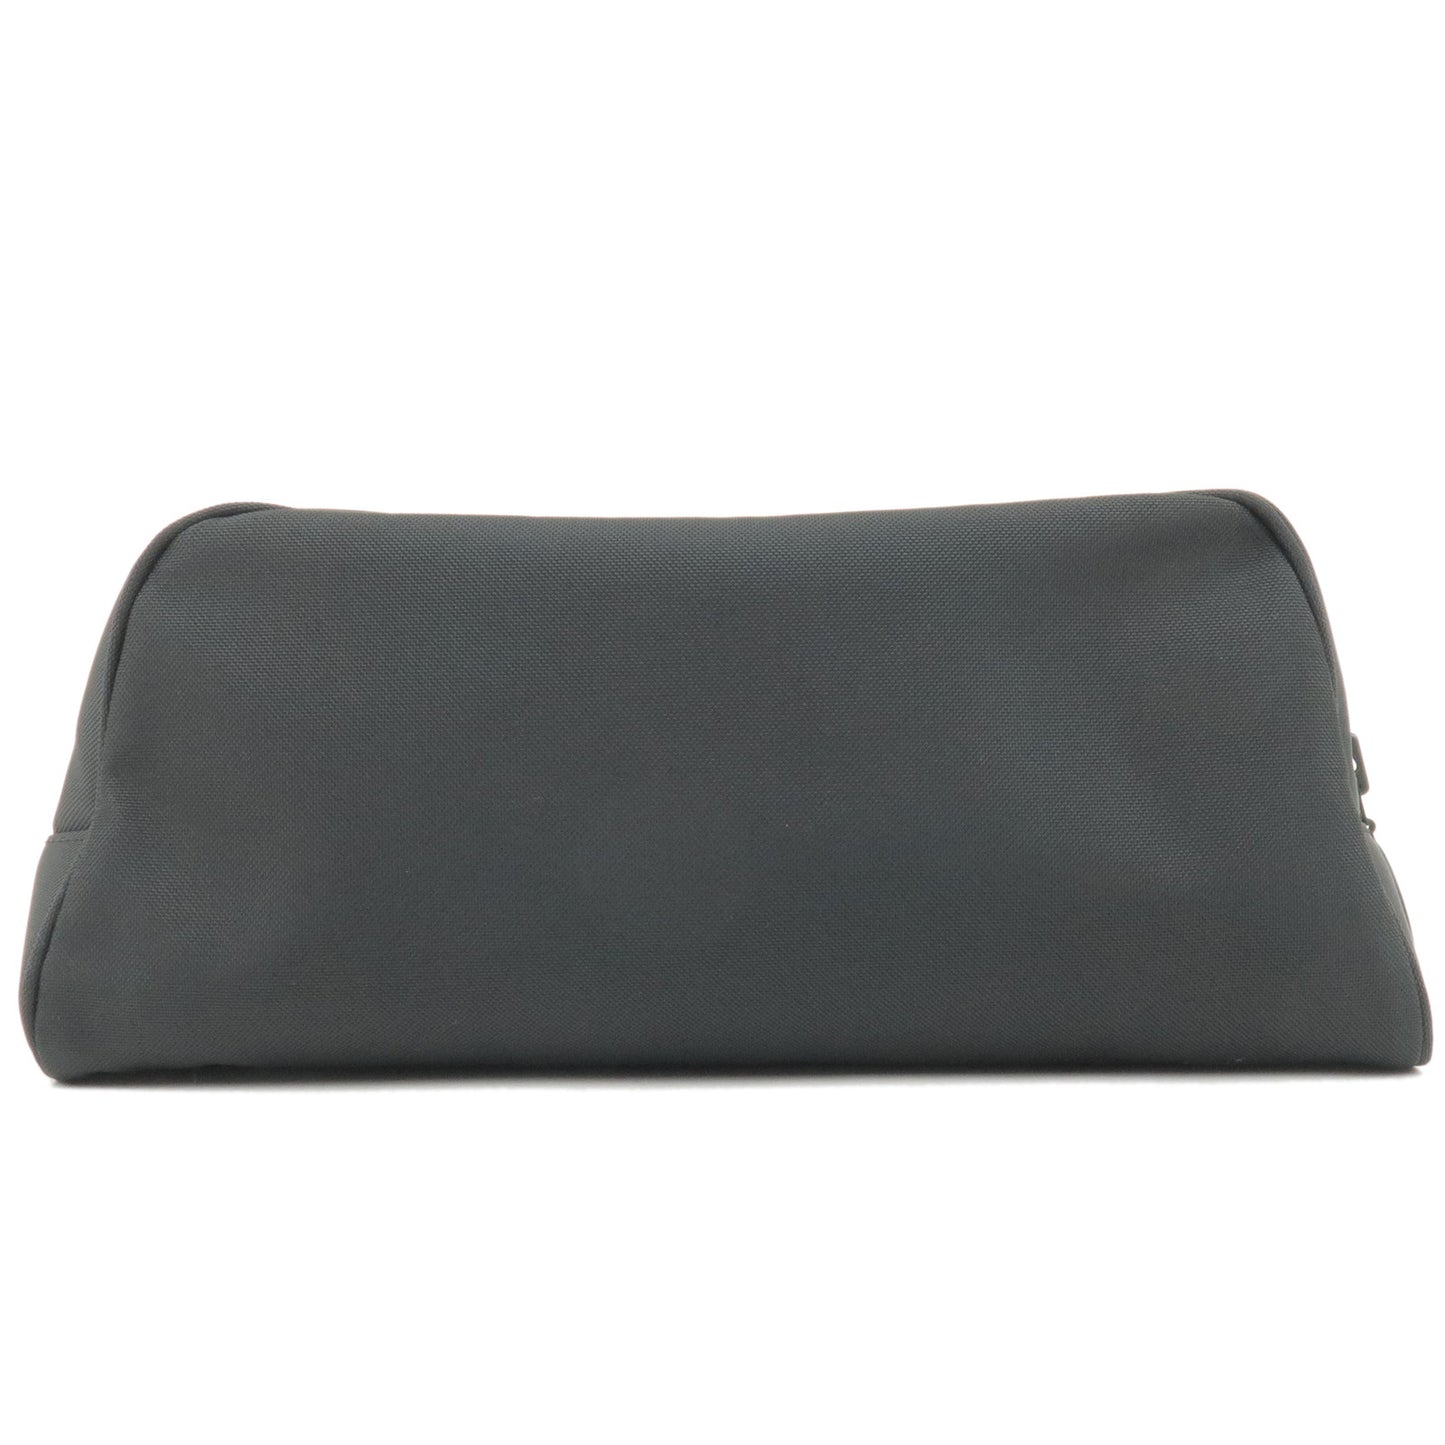 CHANEL Sports Line Nylon Canvas Rubber Second Bag Clutch Bag Black